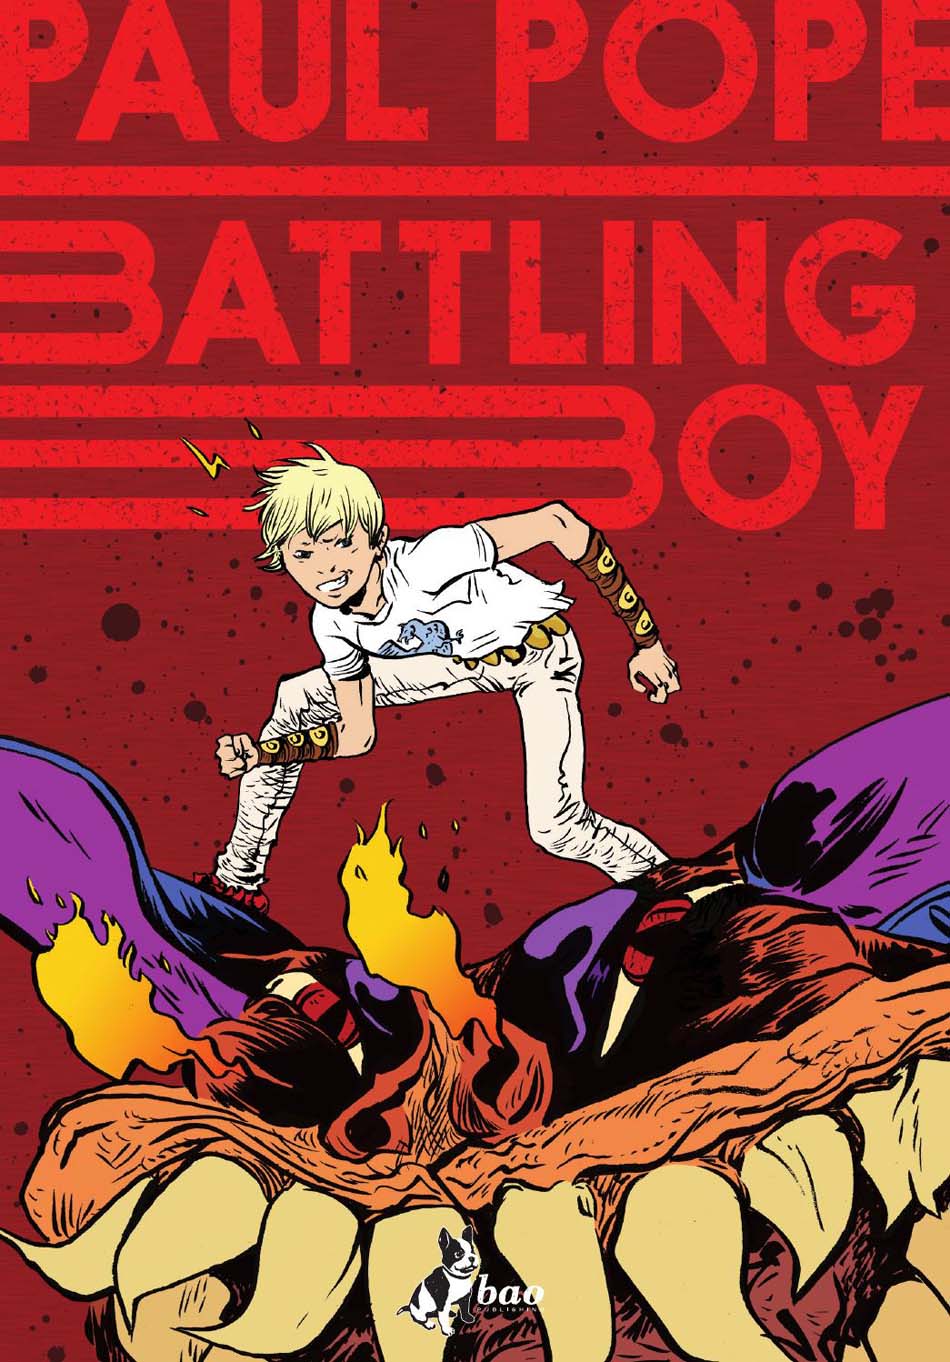 Battling Boy 1 COVER